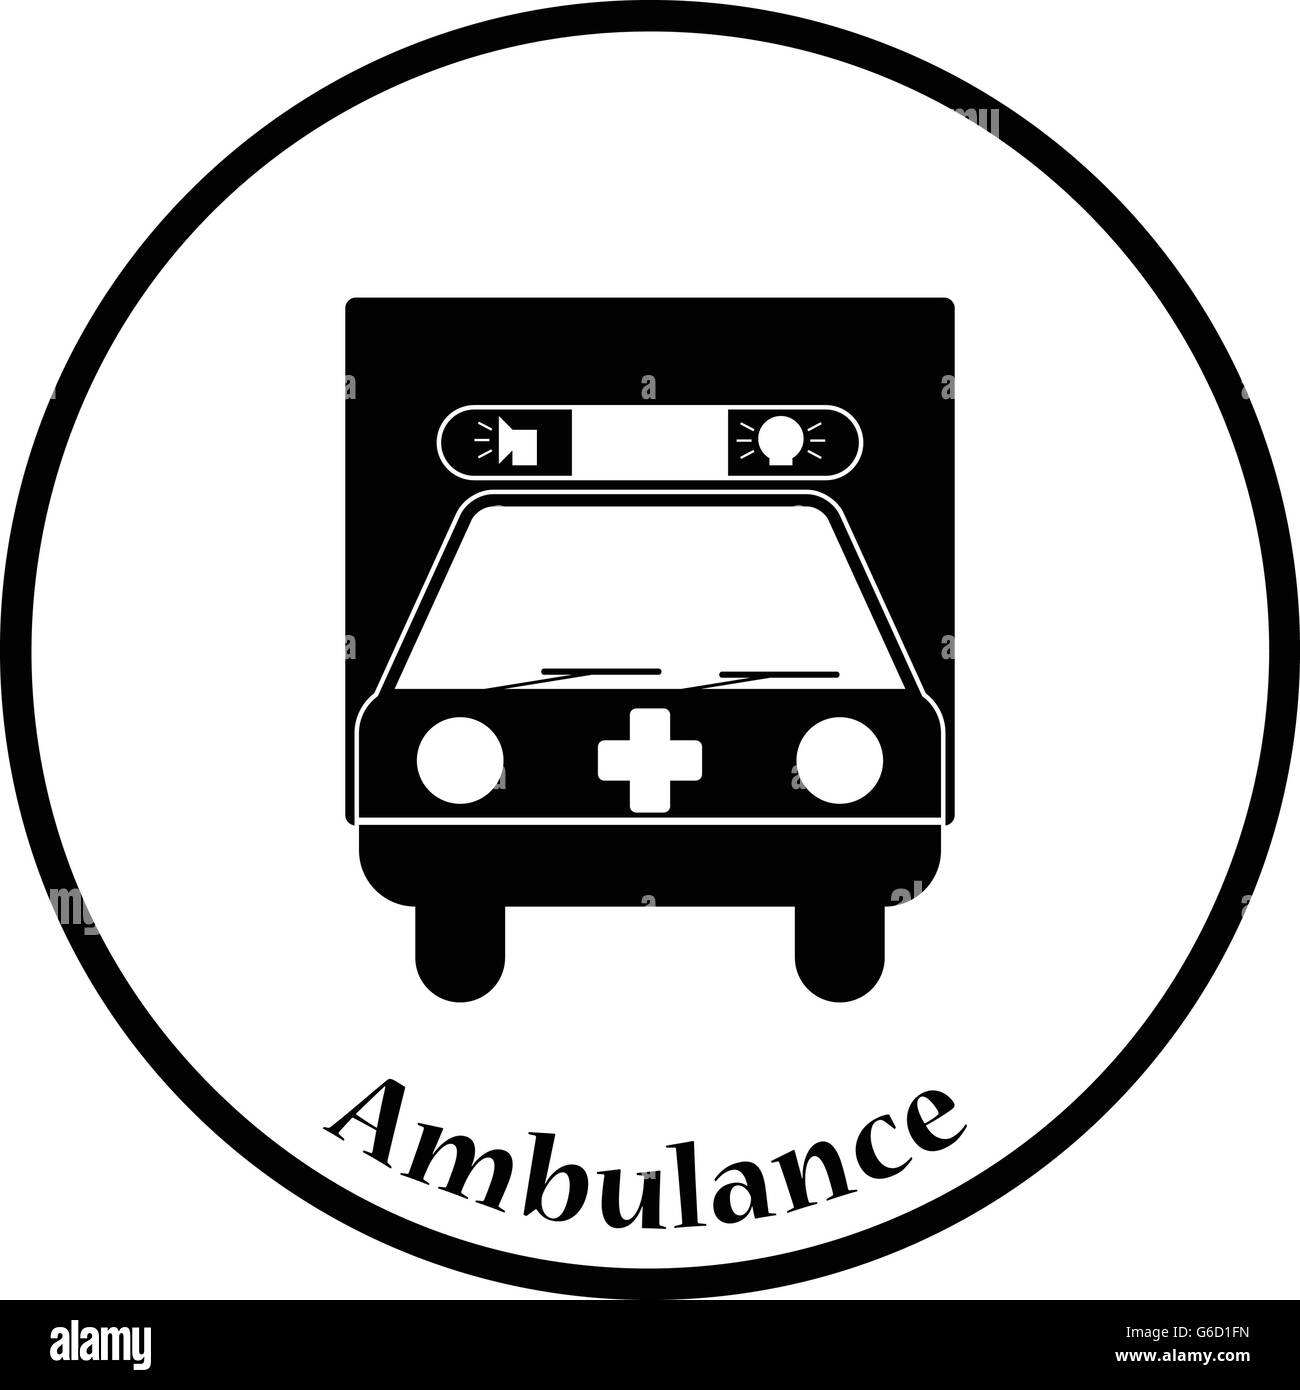 Ambulance car icon. Thin circle design. Vector illustration. Stock Vector